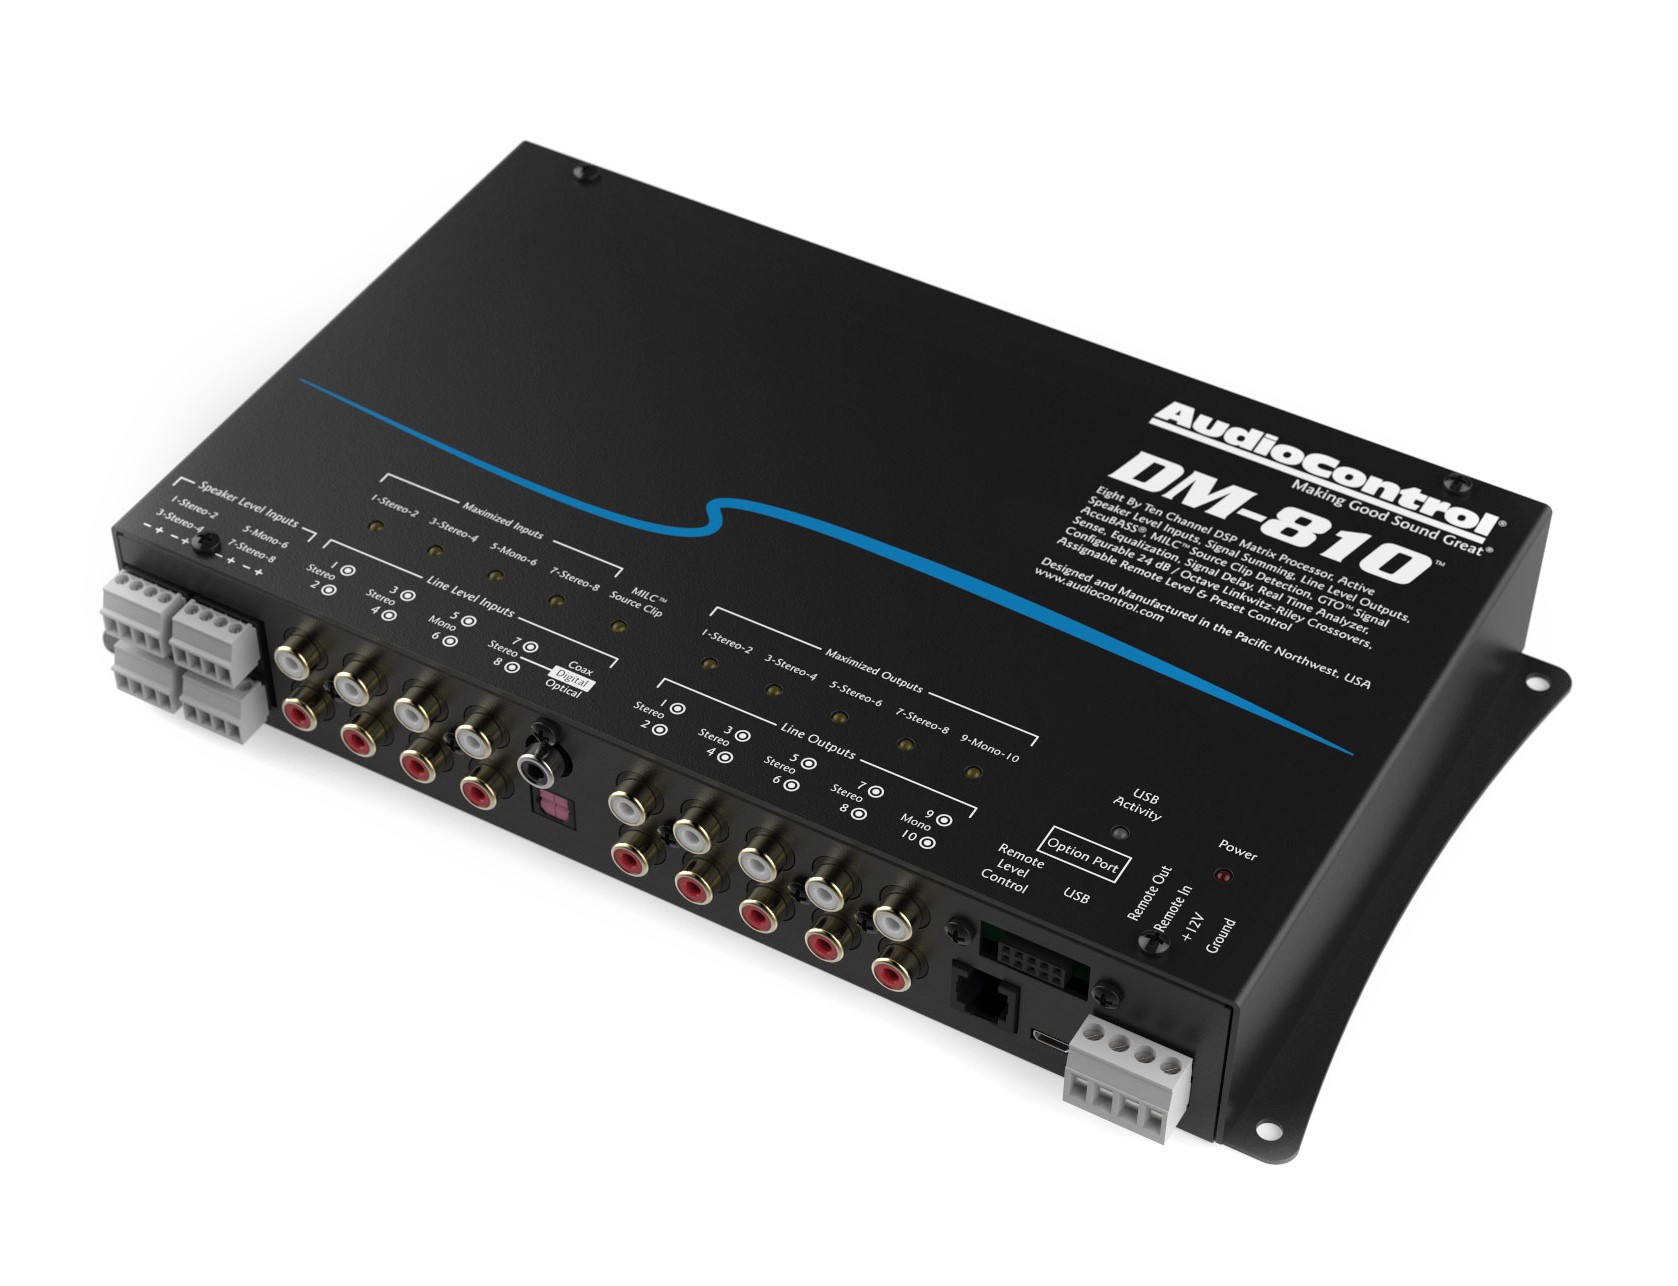 DSP procesor AudioControl DM-810